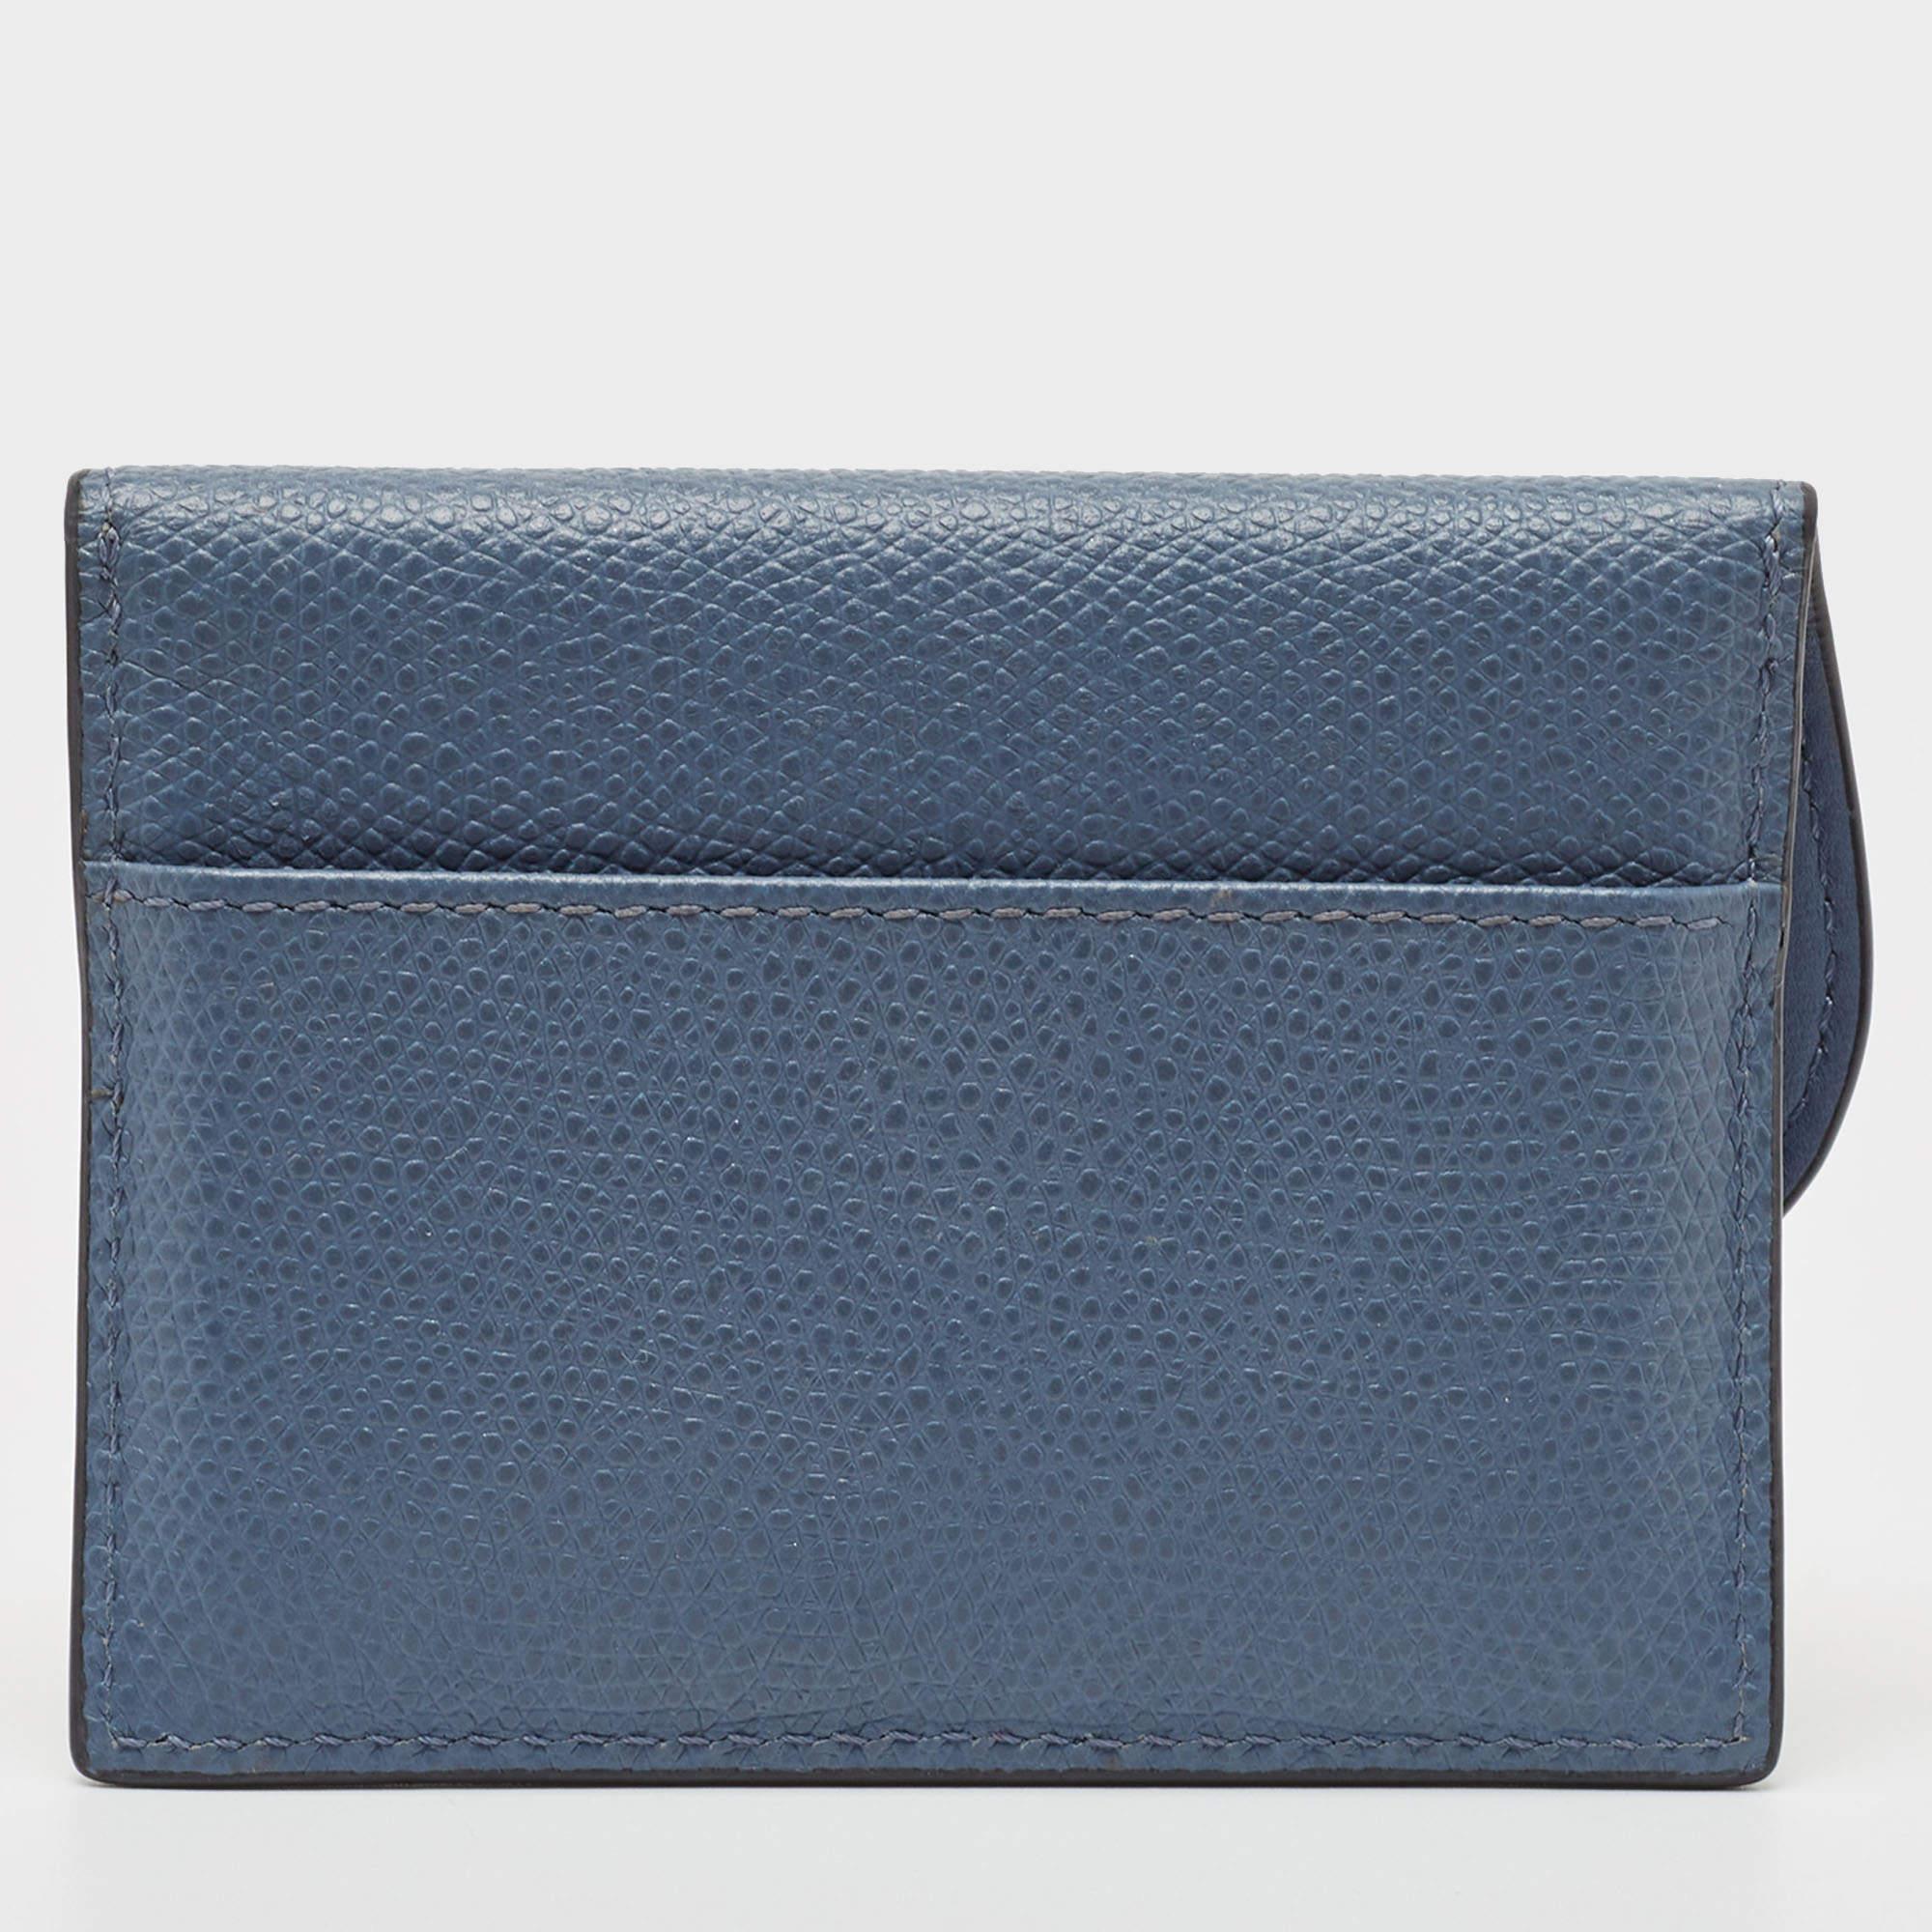 Dior Light Blue Leather Saddle Card Holder In Good Condition For Sale In Dubai, Al Qouz 2